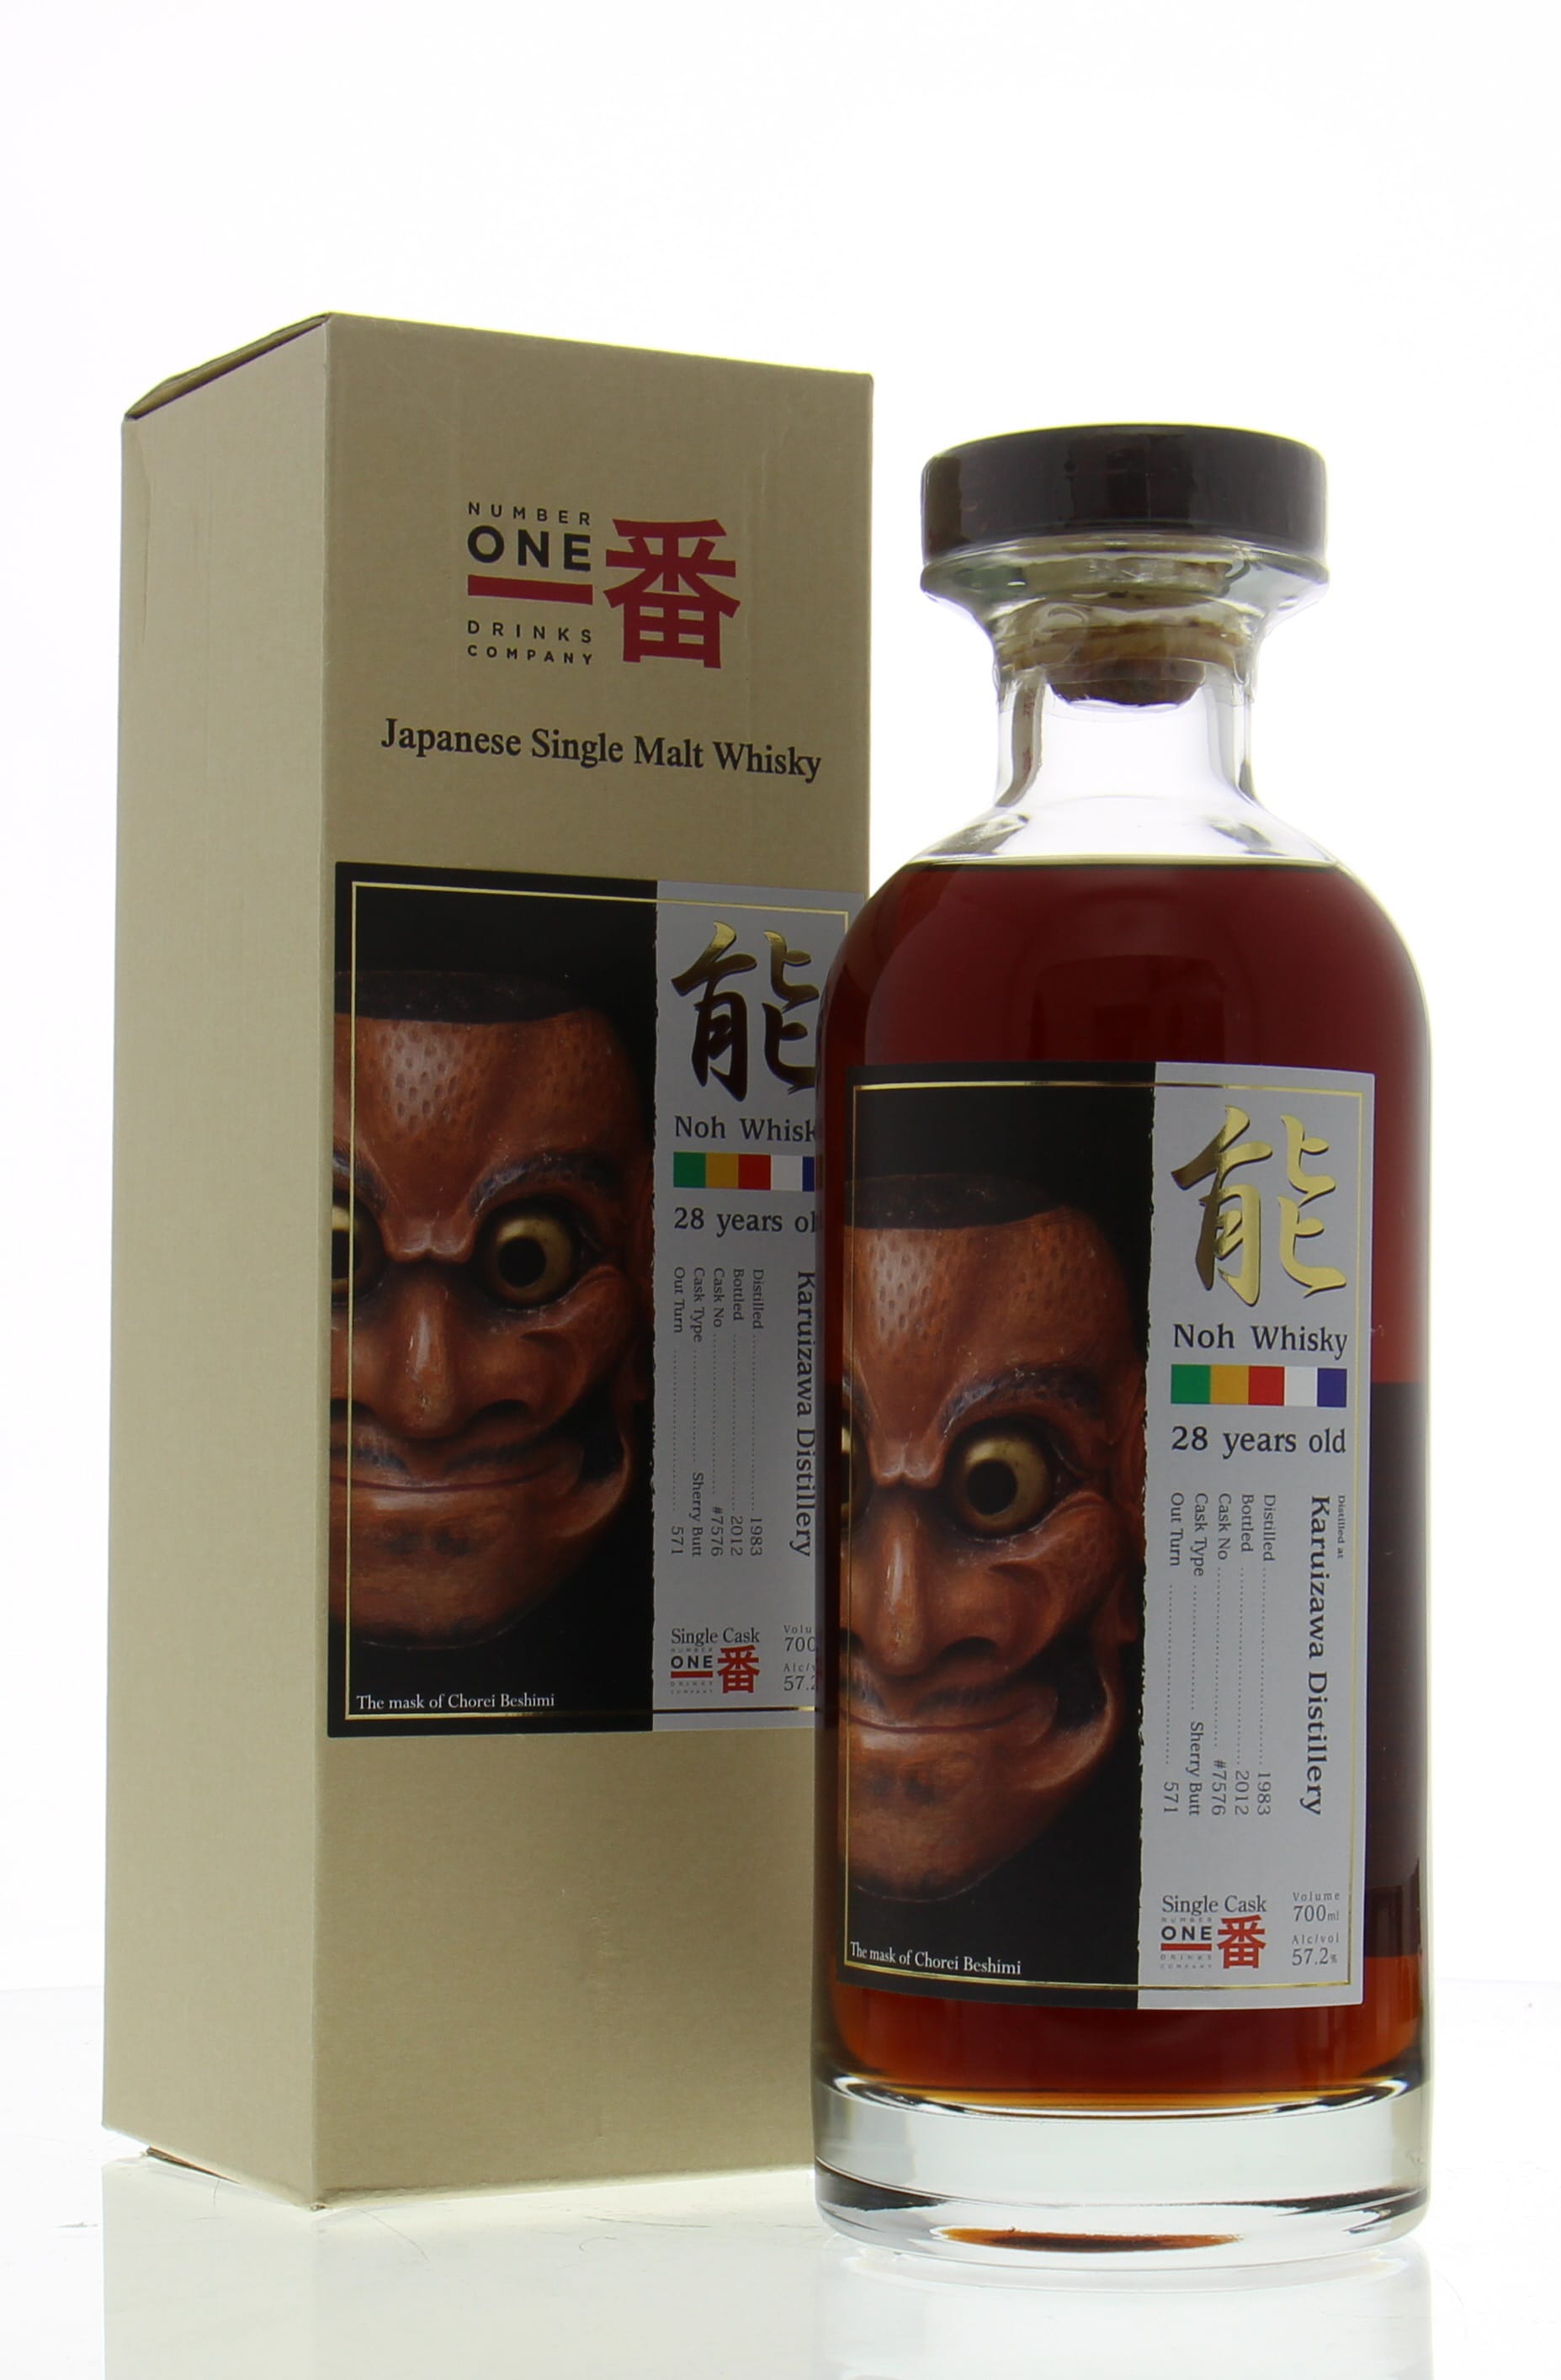 Karuizawa - 28 Years Old Noh Whisky Chorei Beshimi Cask 7576 57.2% 1983